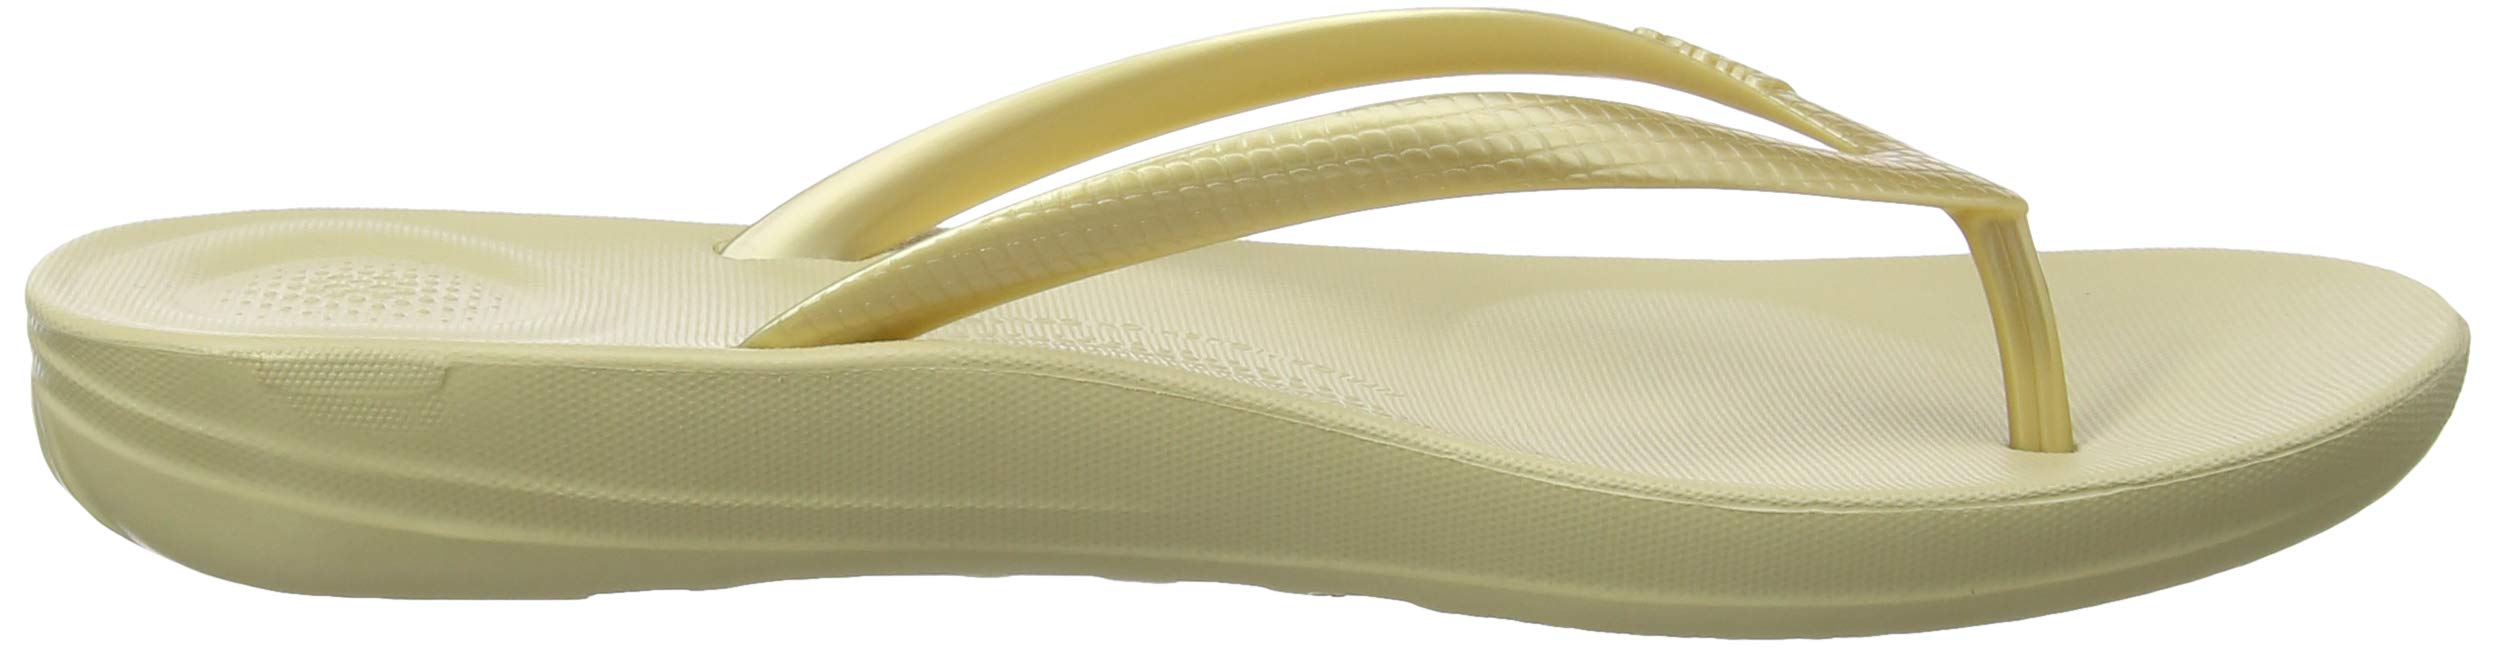 FitFlop Women's Iqushion Pearlized Ergonomic Flip-Flops Wedge Sandal, 0